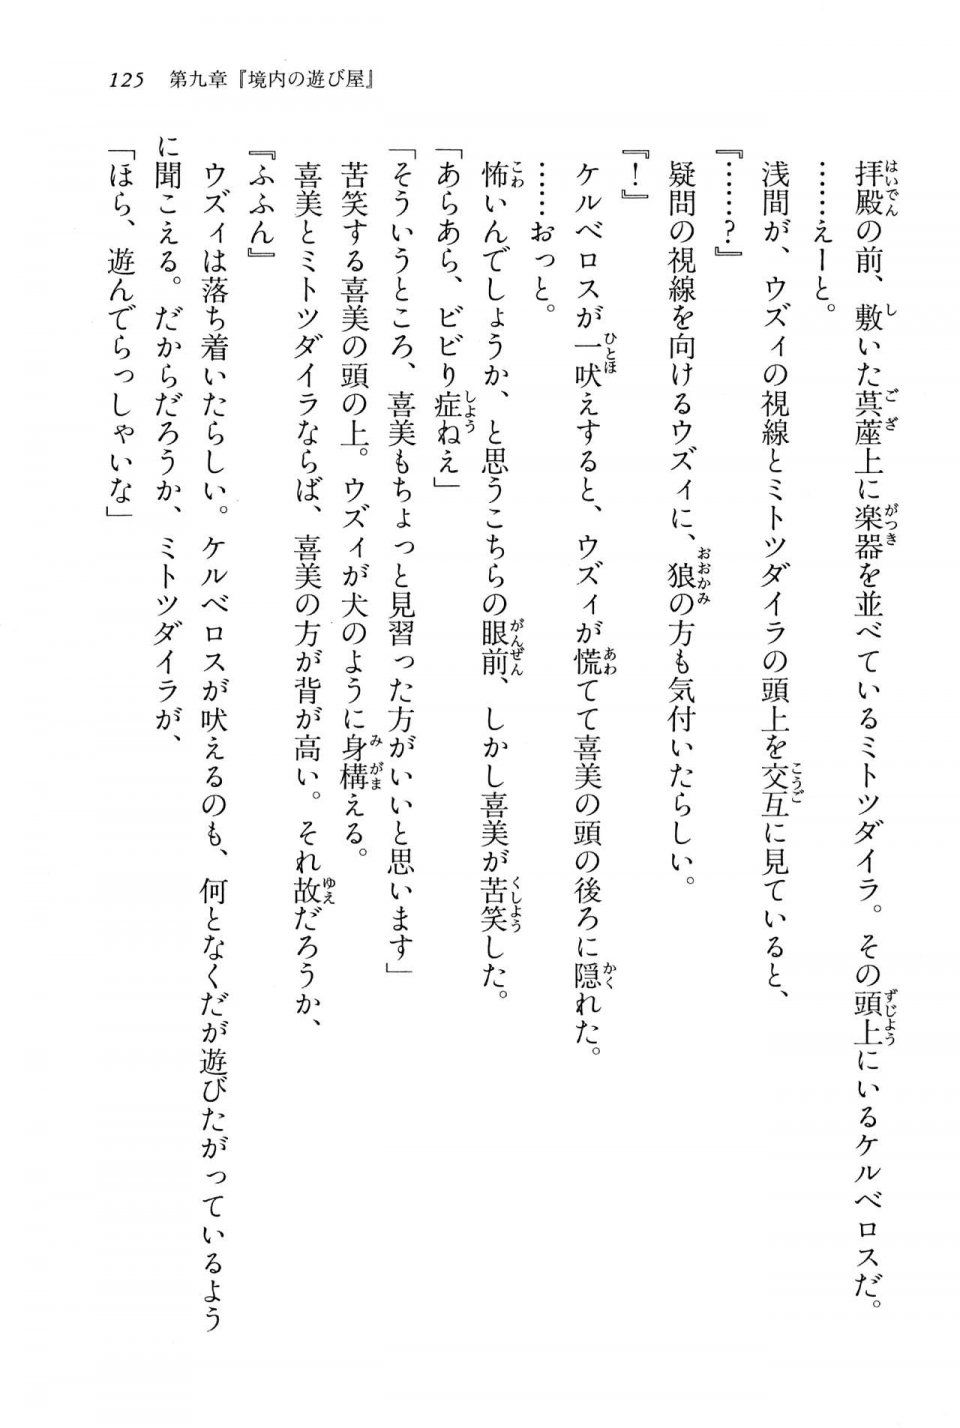 Kyoukai Senjou no Horizon BD Special Mininovel Vol 6(3B) - Photo #129